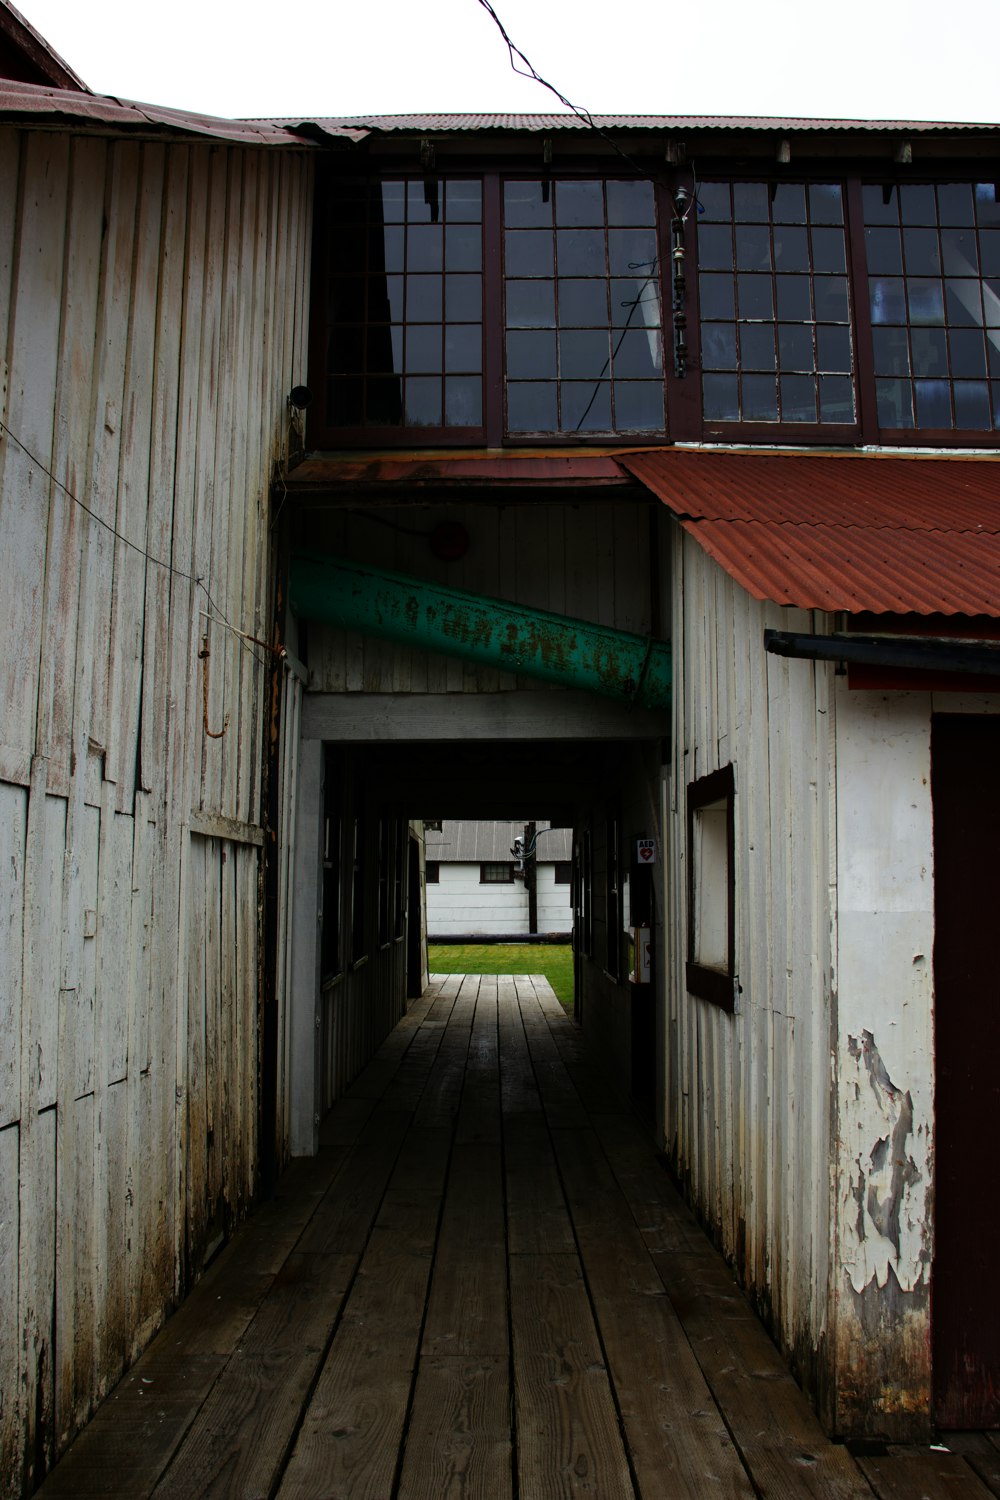 a wooden walkway between two buildings